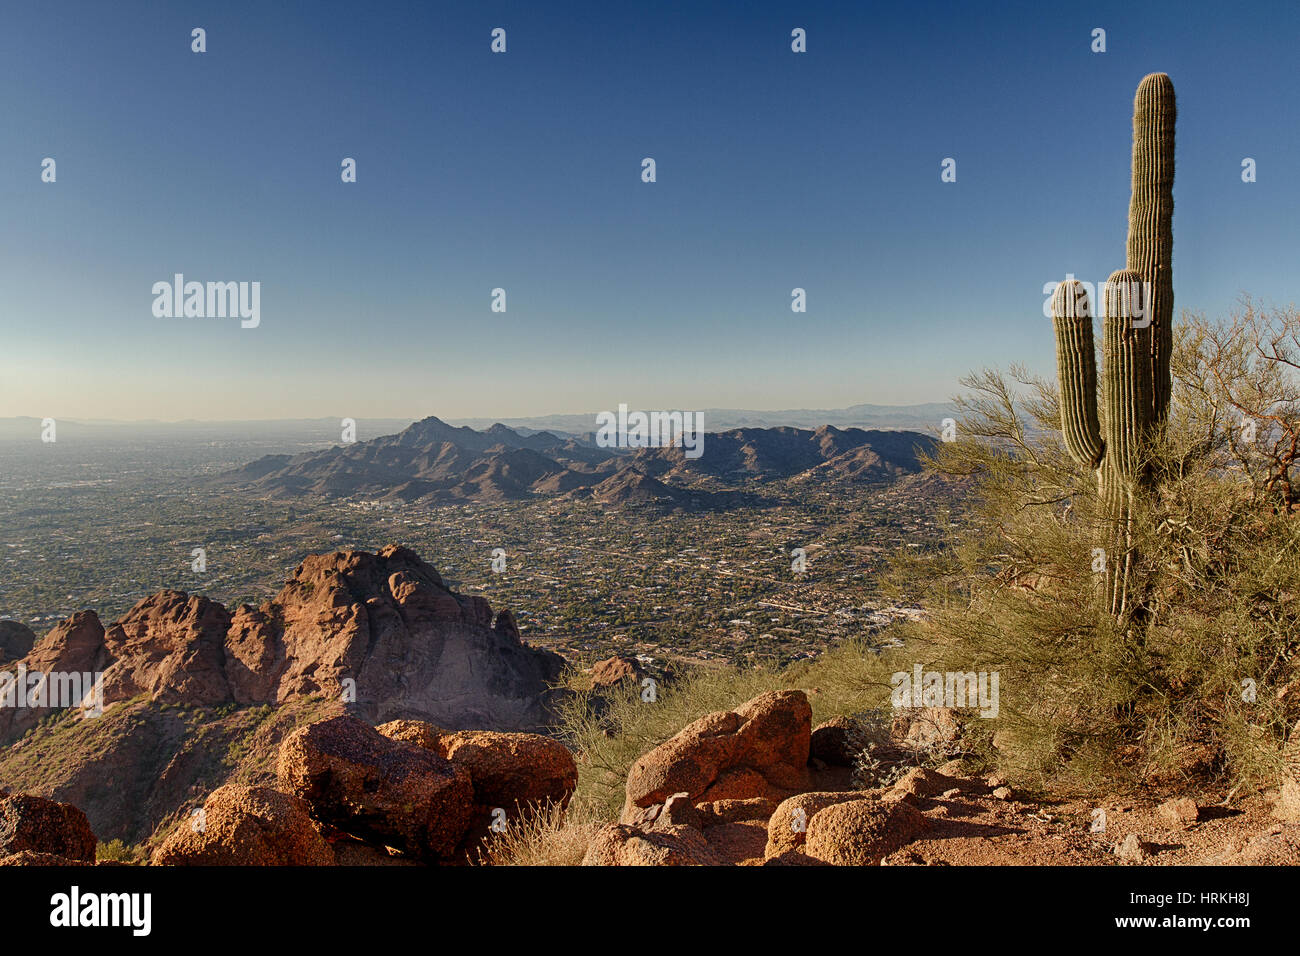 Cambelback Berg Phoenix Arizona Stockfoto